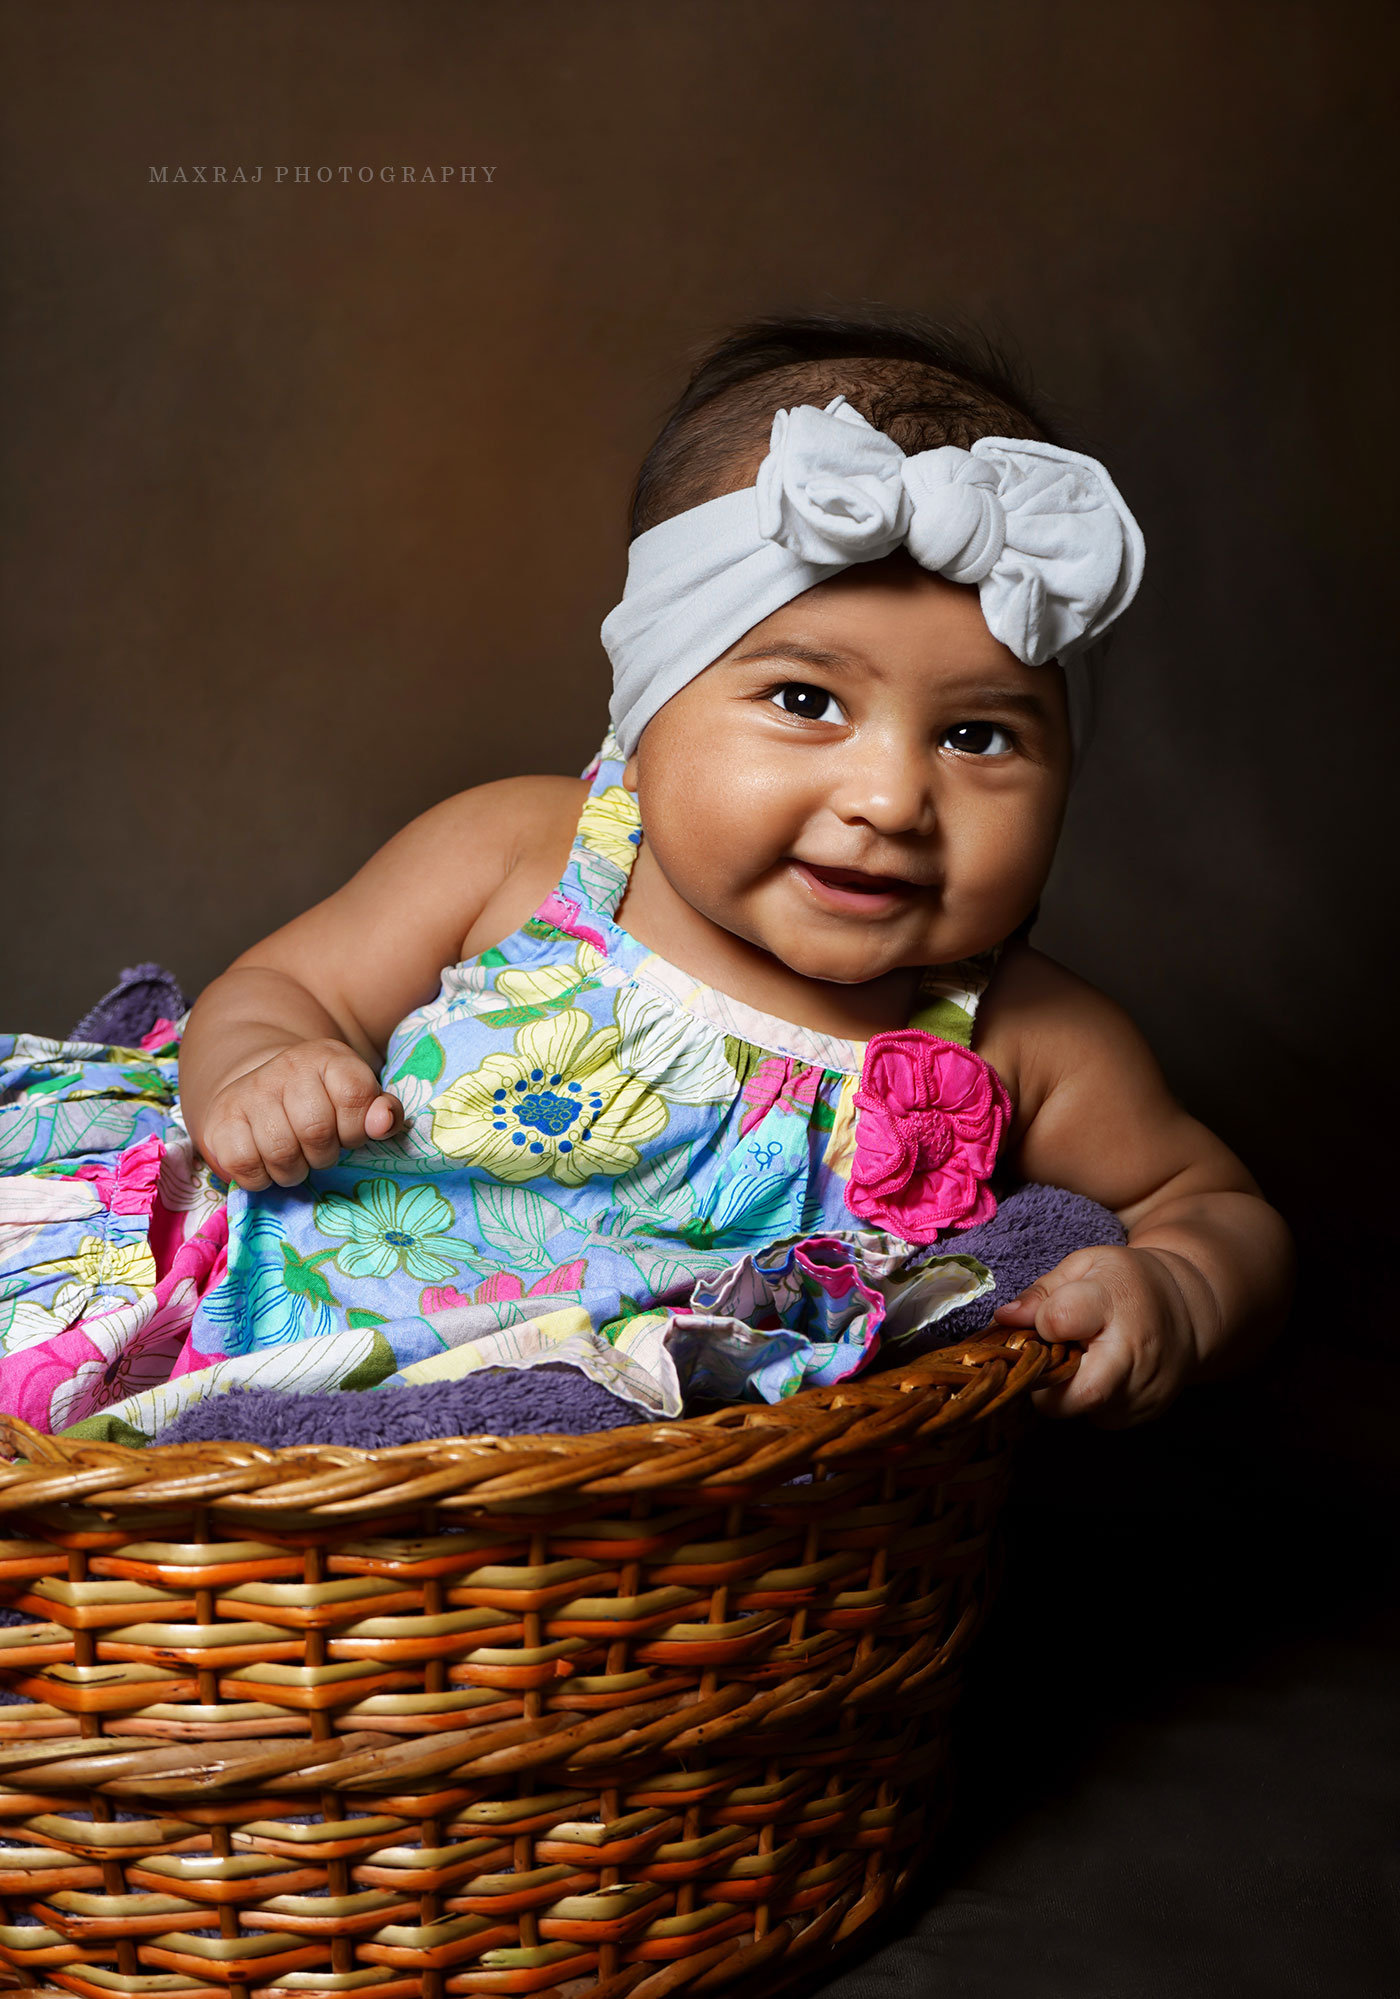 best baby photoshoot ideas, baby photographer pune